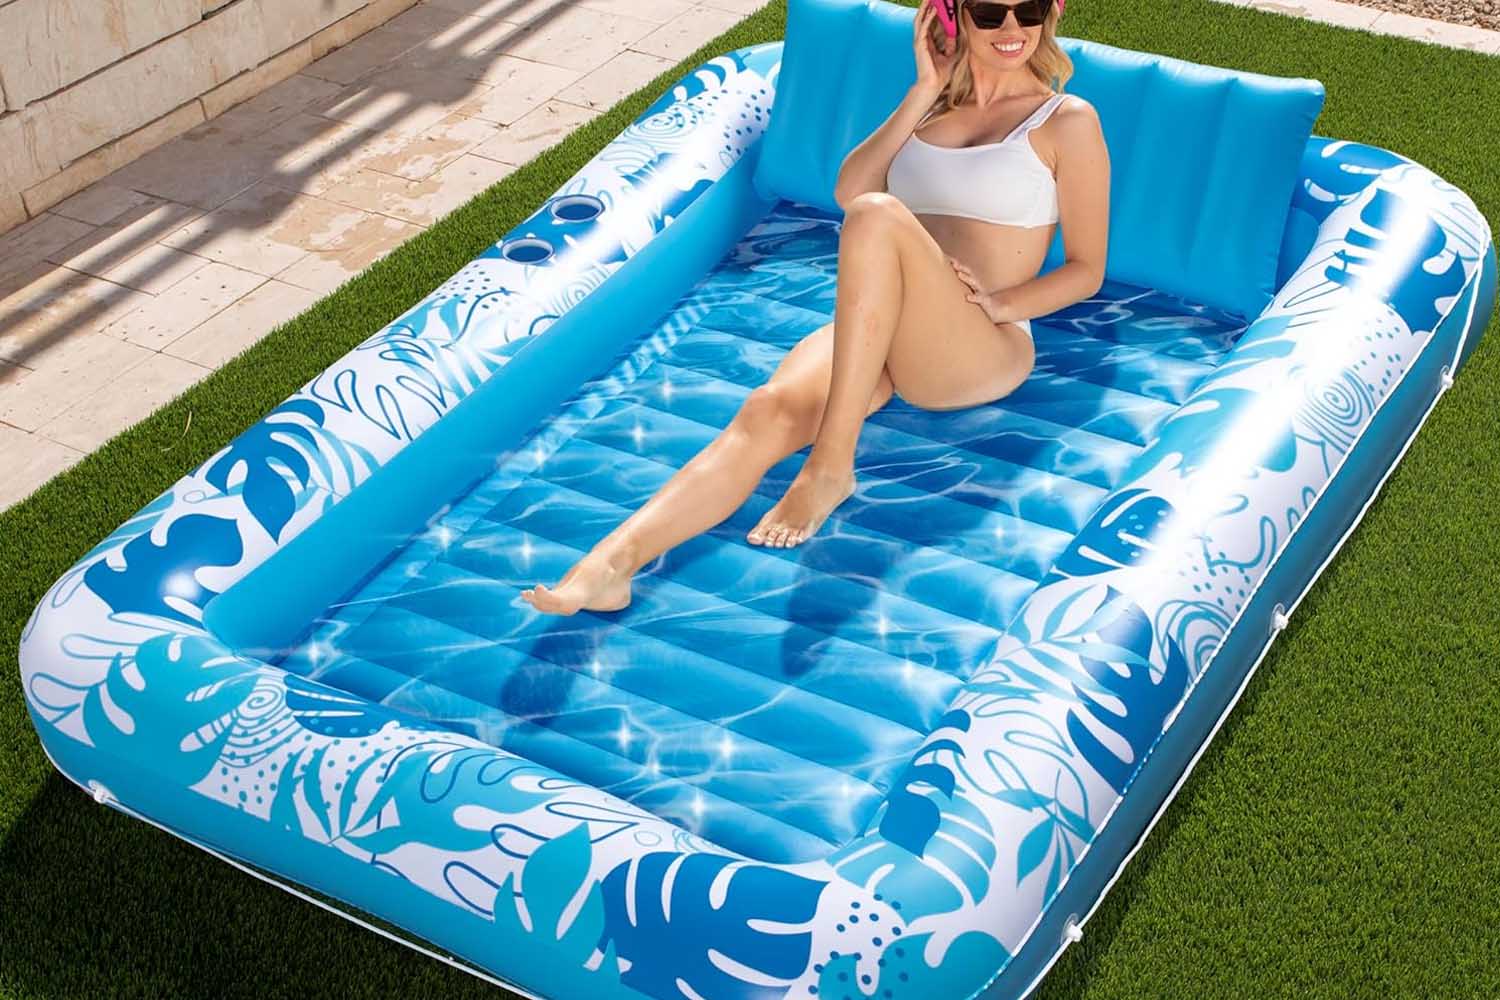 Sloosh Inflatable Tanning Pool